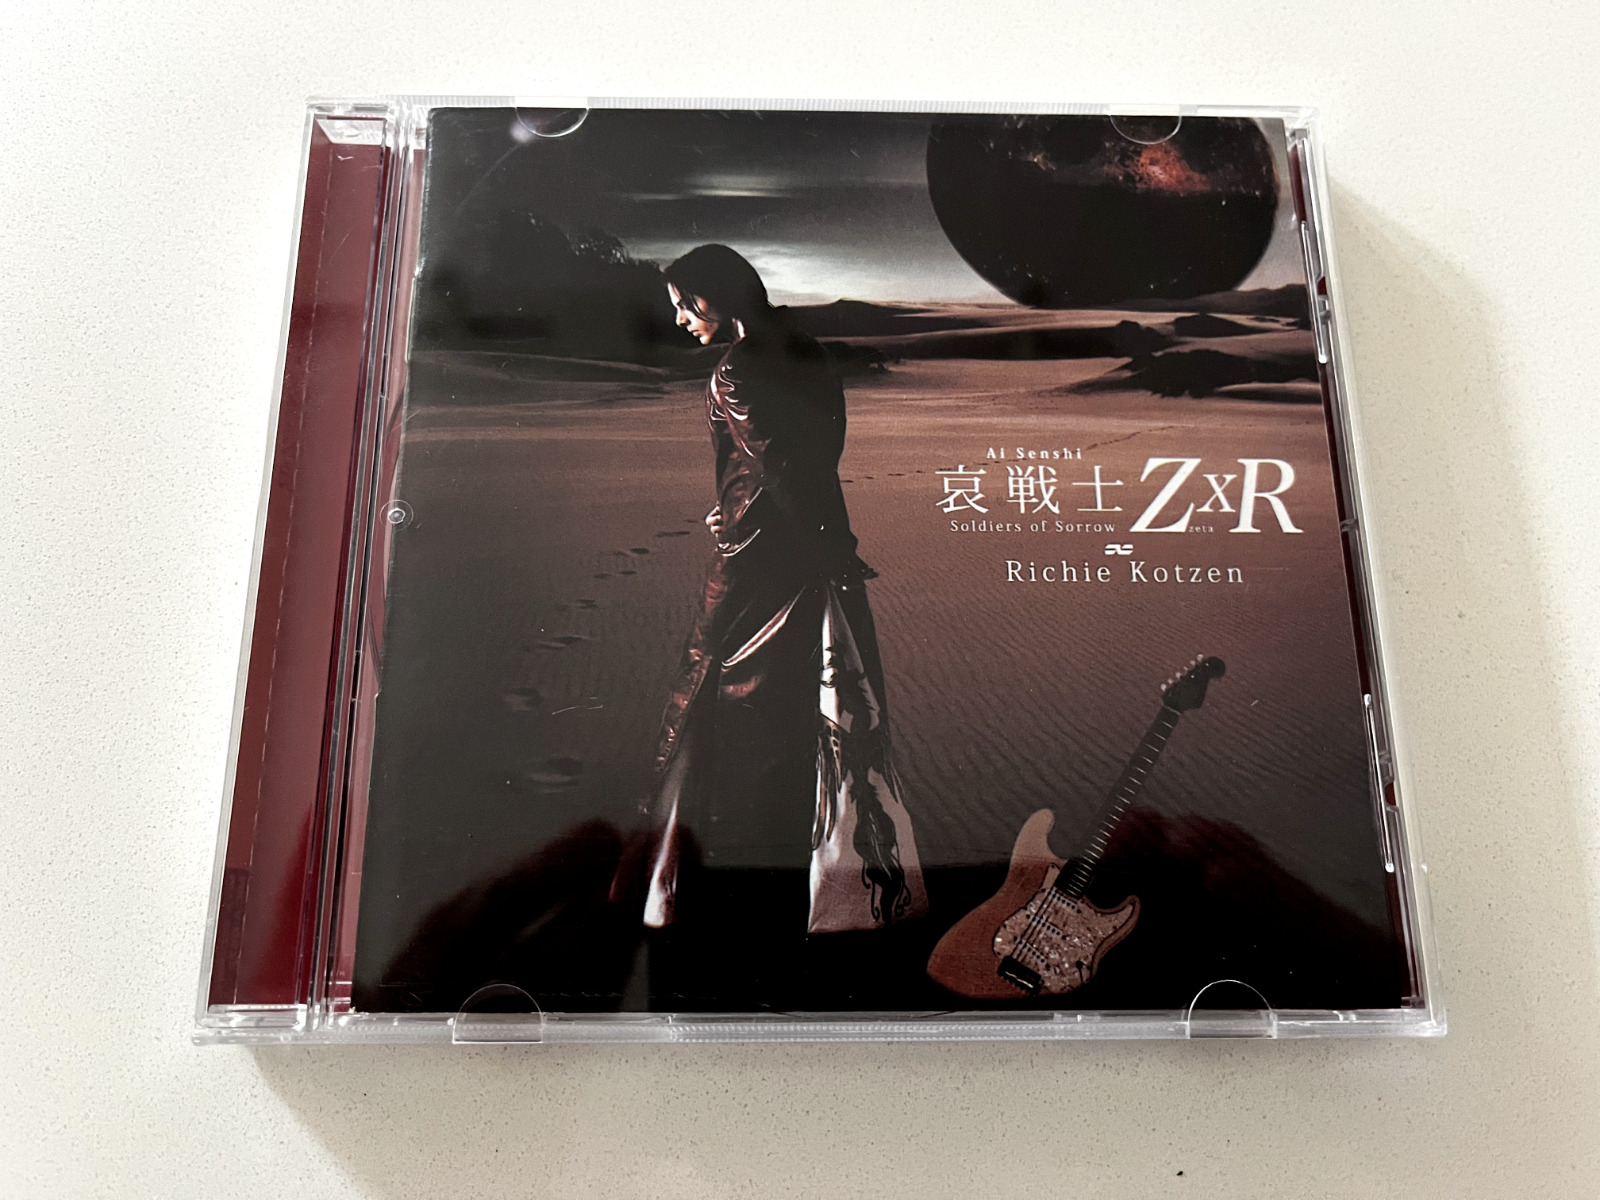 Richie Kotzen Billy Sheehan MR BIG Ai Senshi ZxR  P-A6  cd soldiers of sorrow